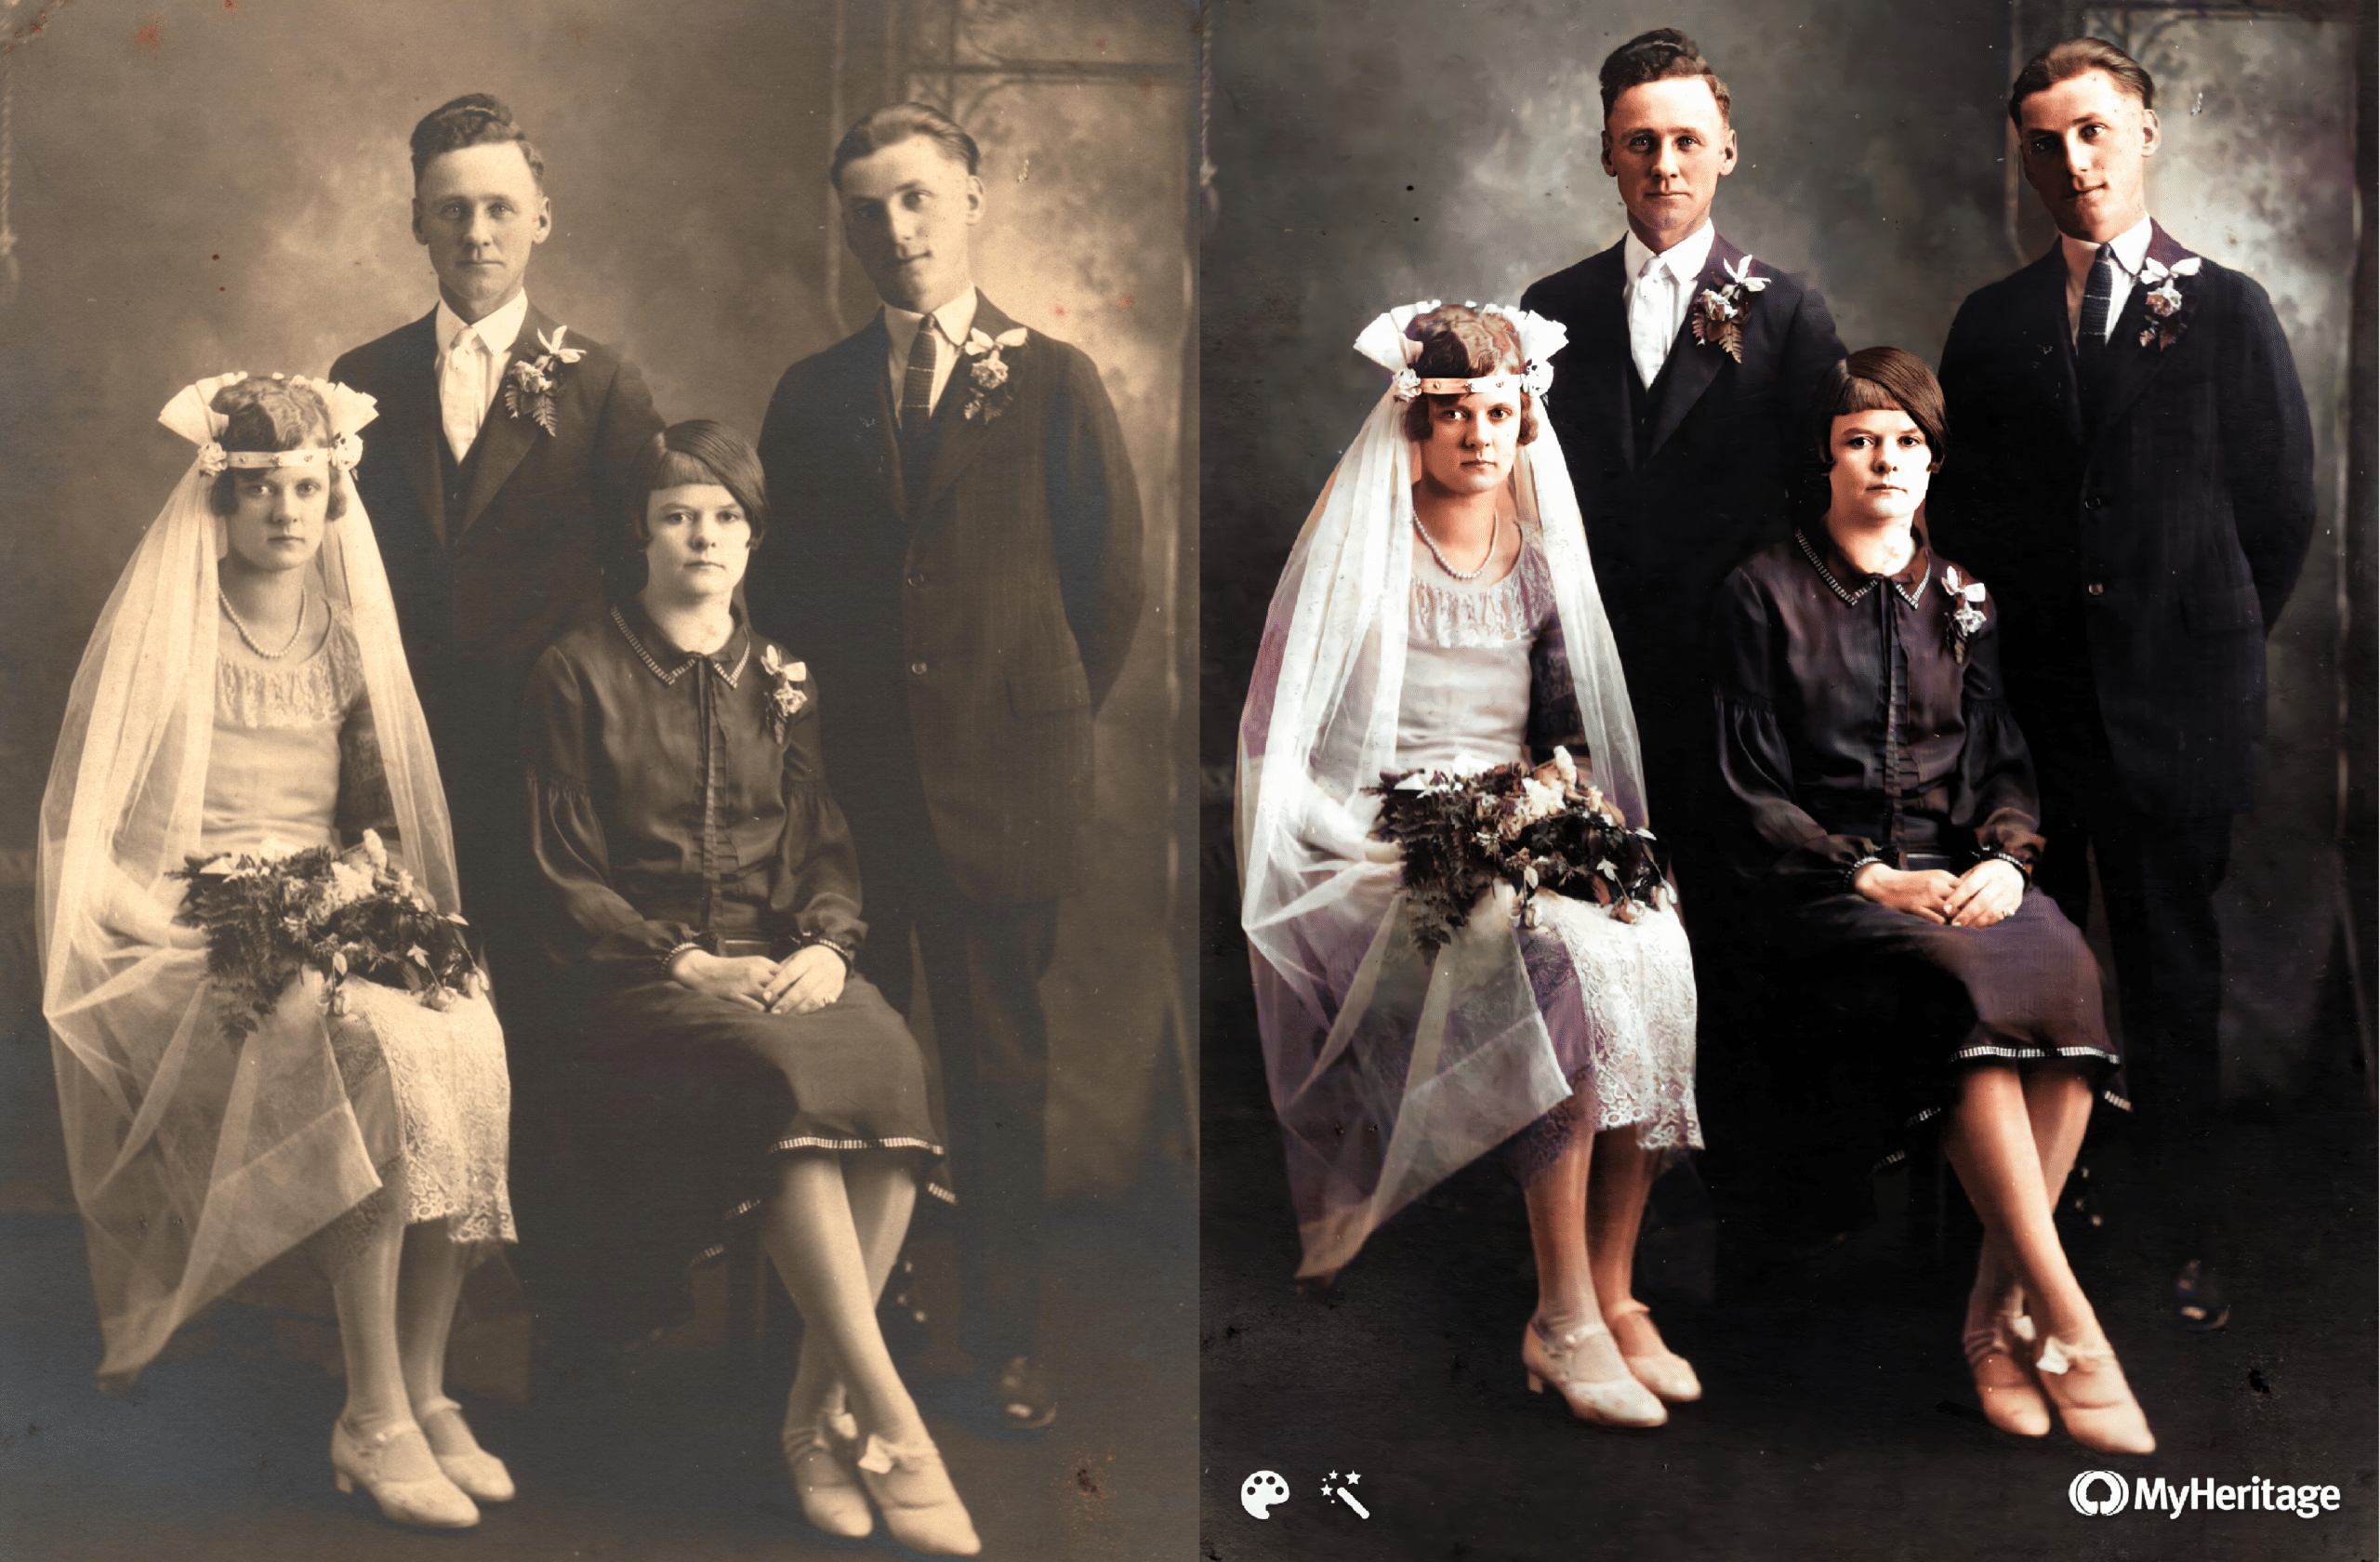 Wedding of Oliver and Clara (Ovre) Kolstad, October 10, 1925